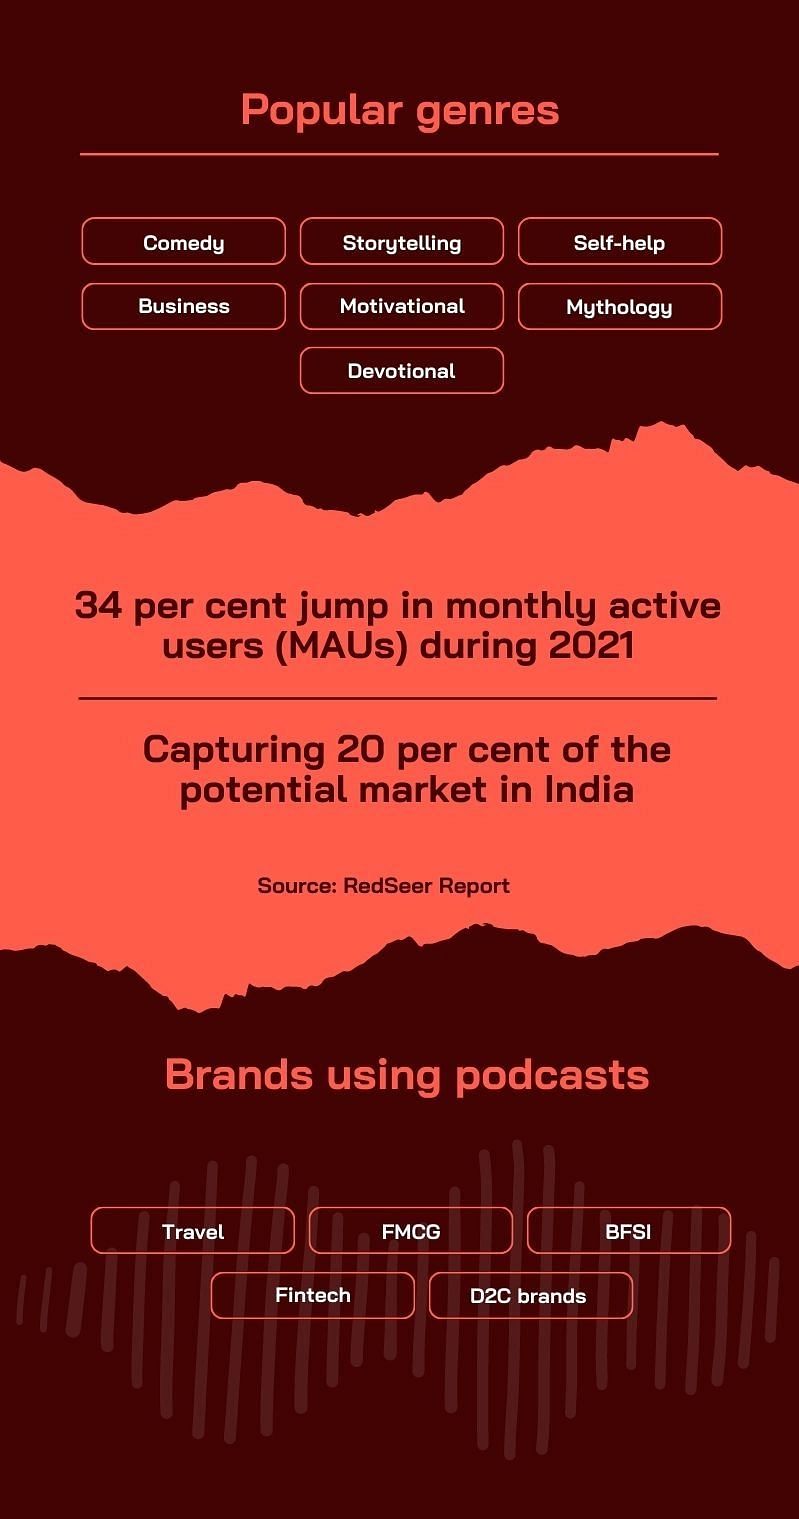 Podcast boom: brands explore audio content to reach consumers